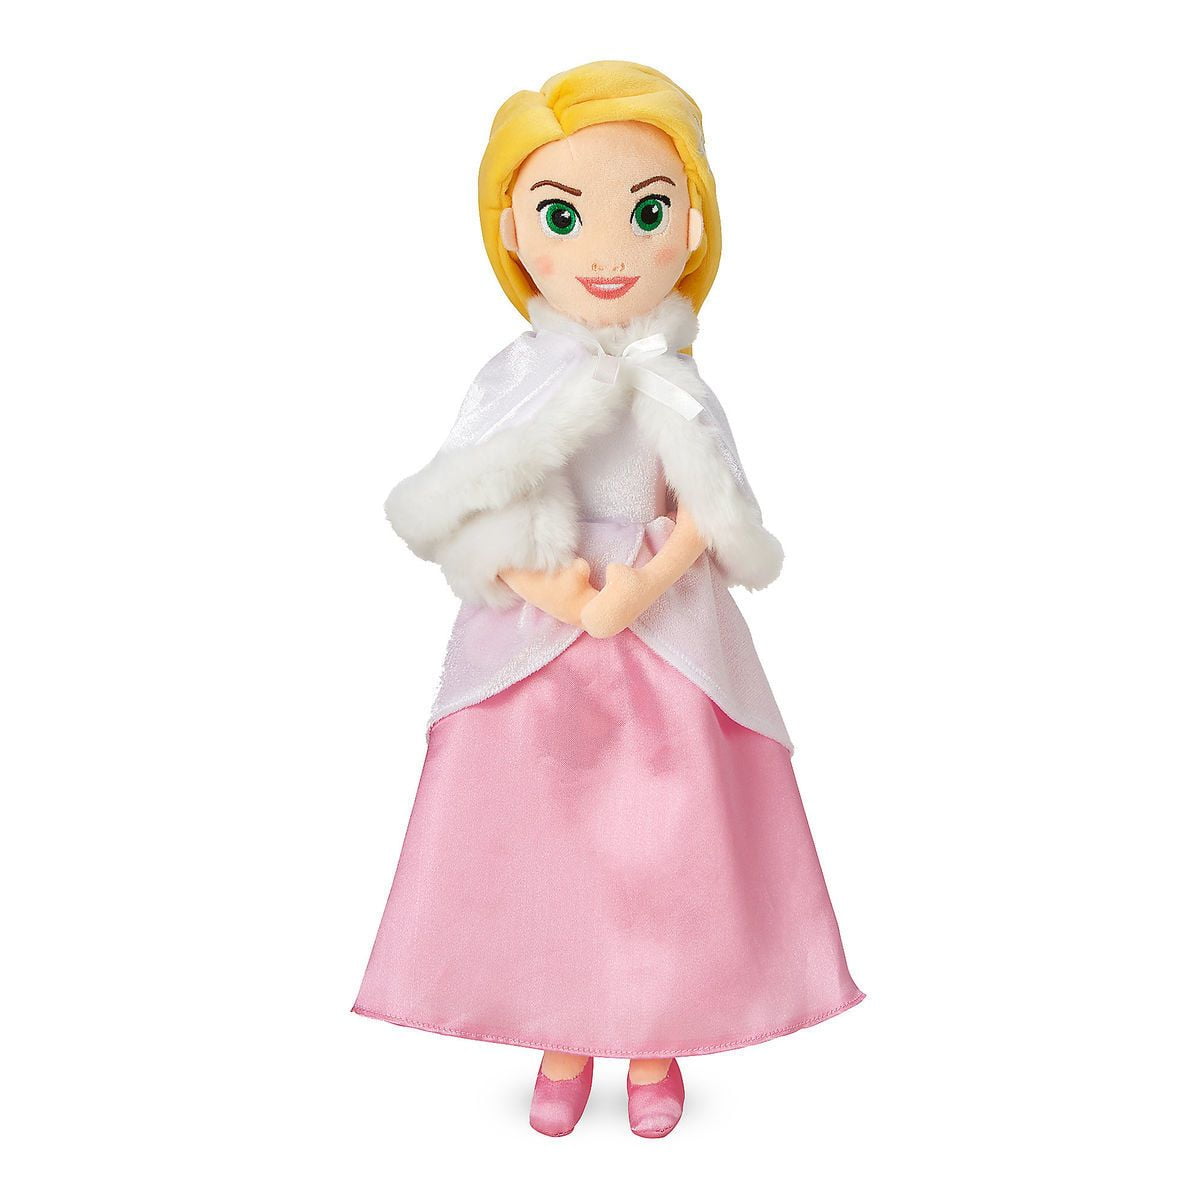 19 Inch Medium Disney Belle Plush Doll in Winter Cape 